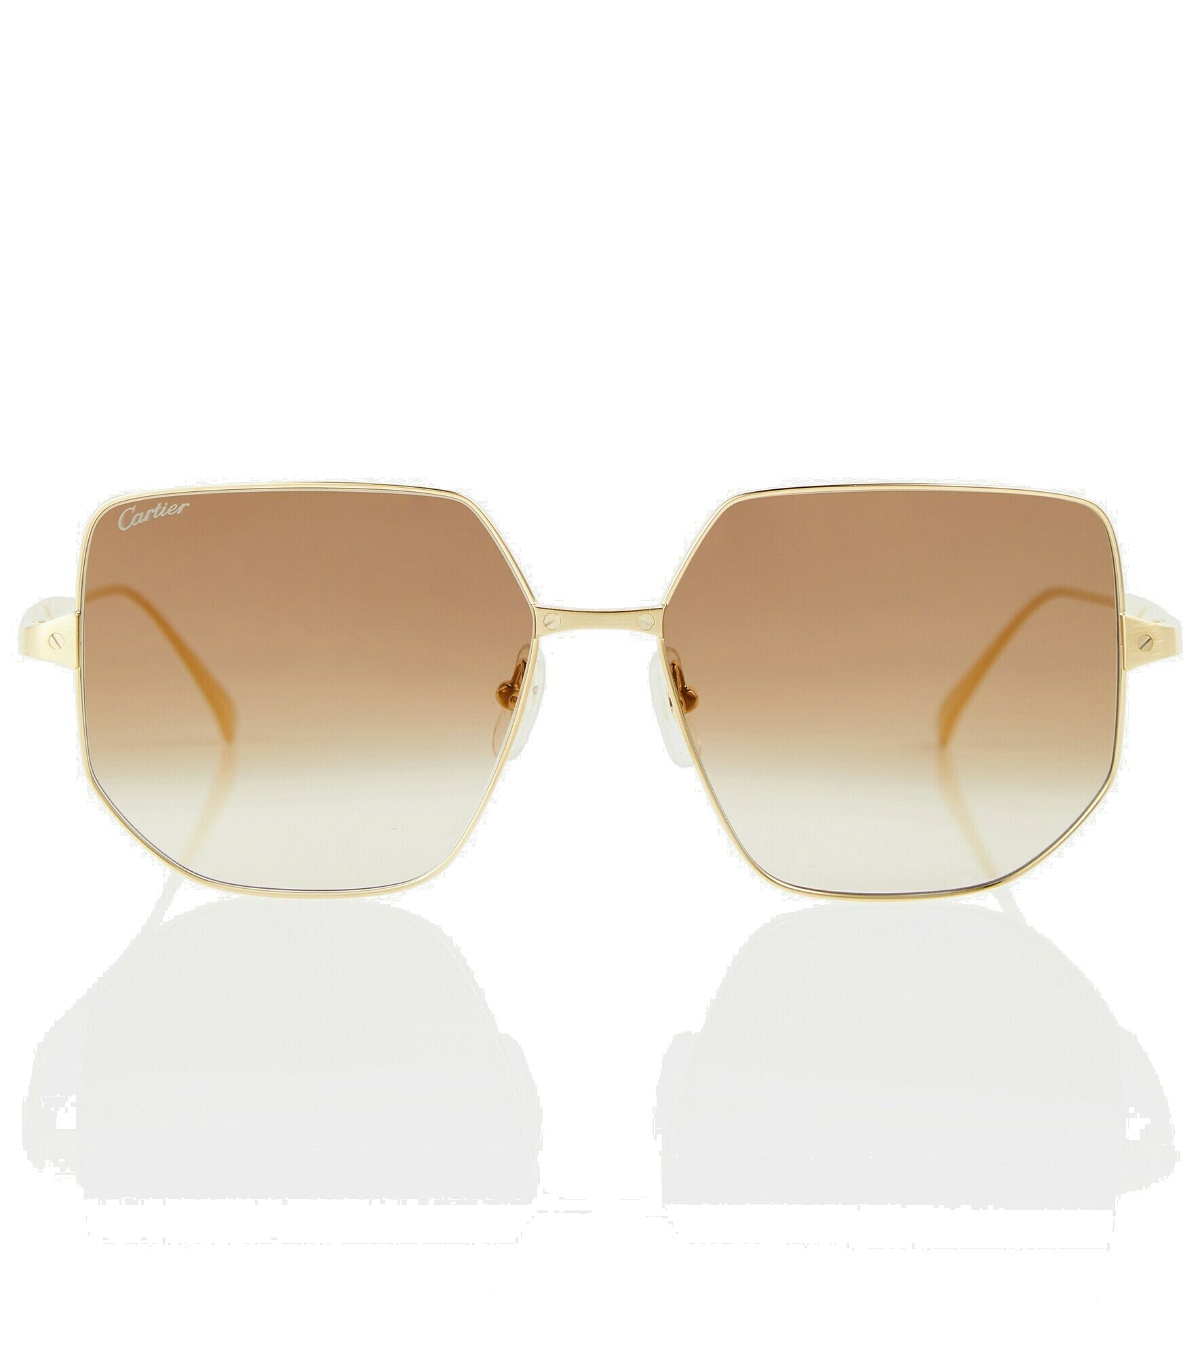 Photo: Cartier Eyewear Collection - Santos de Cartier square sunglasses